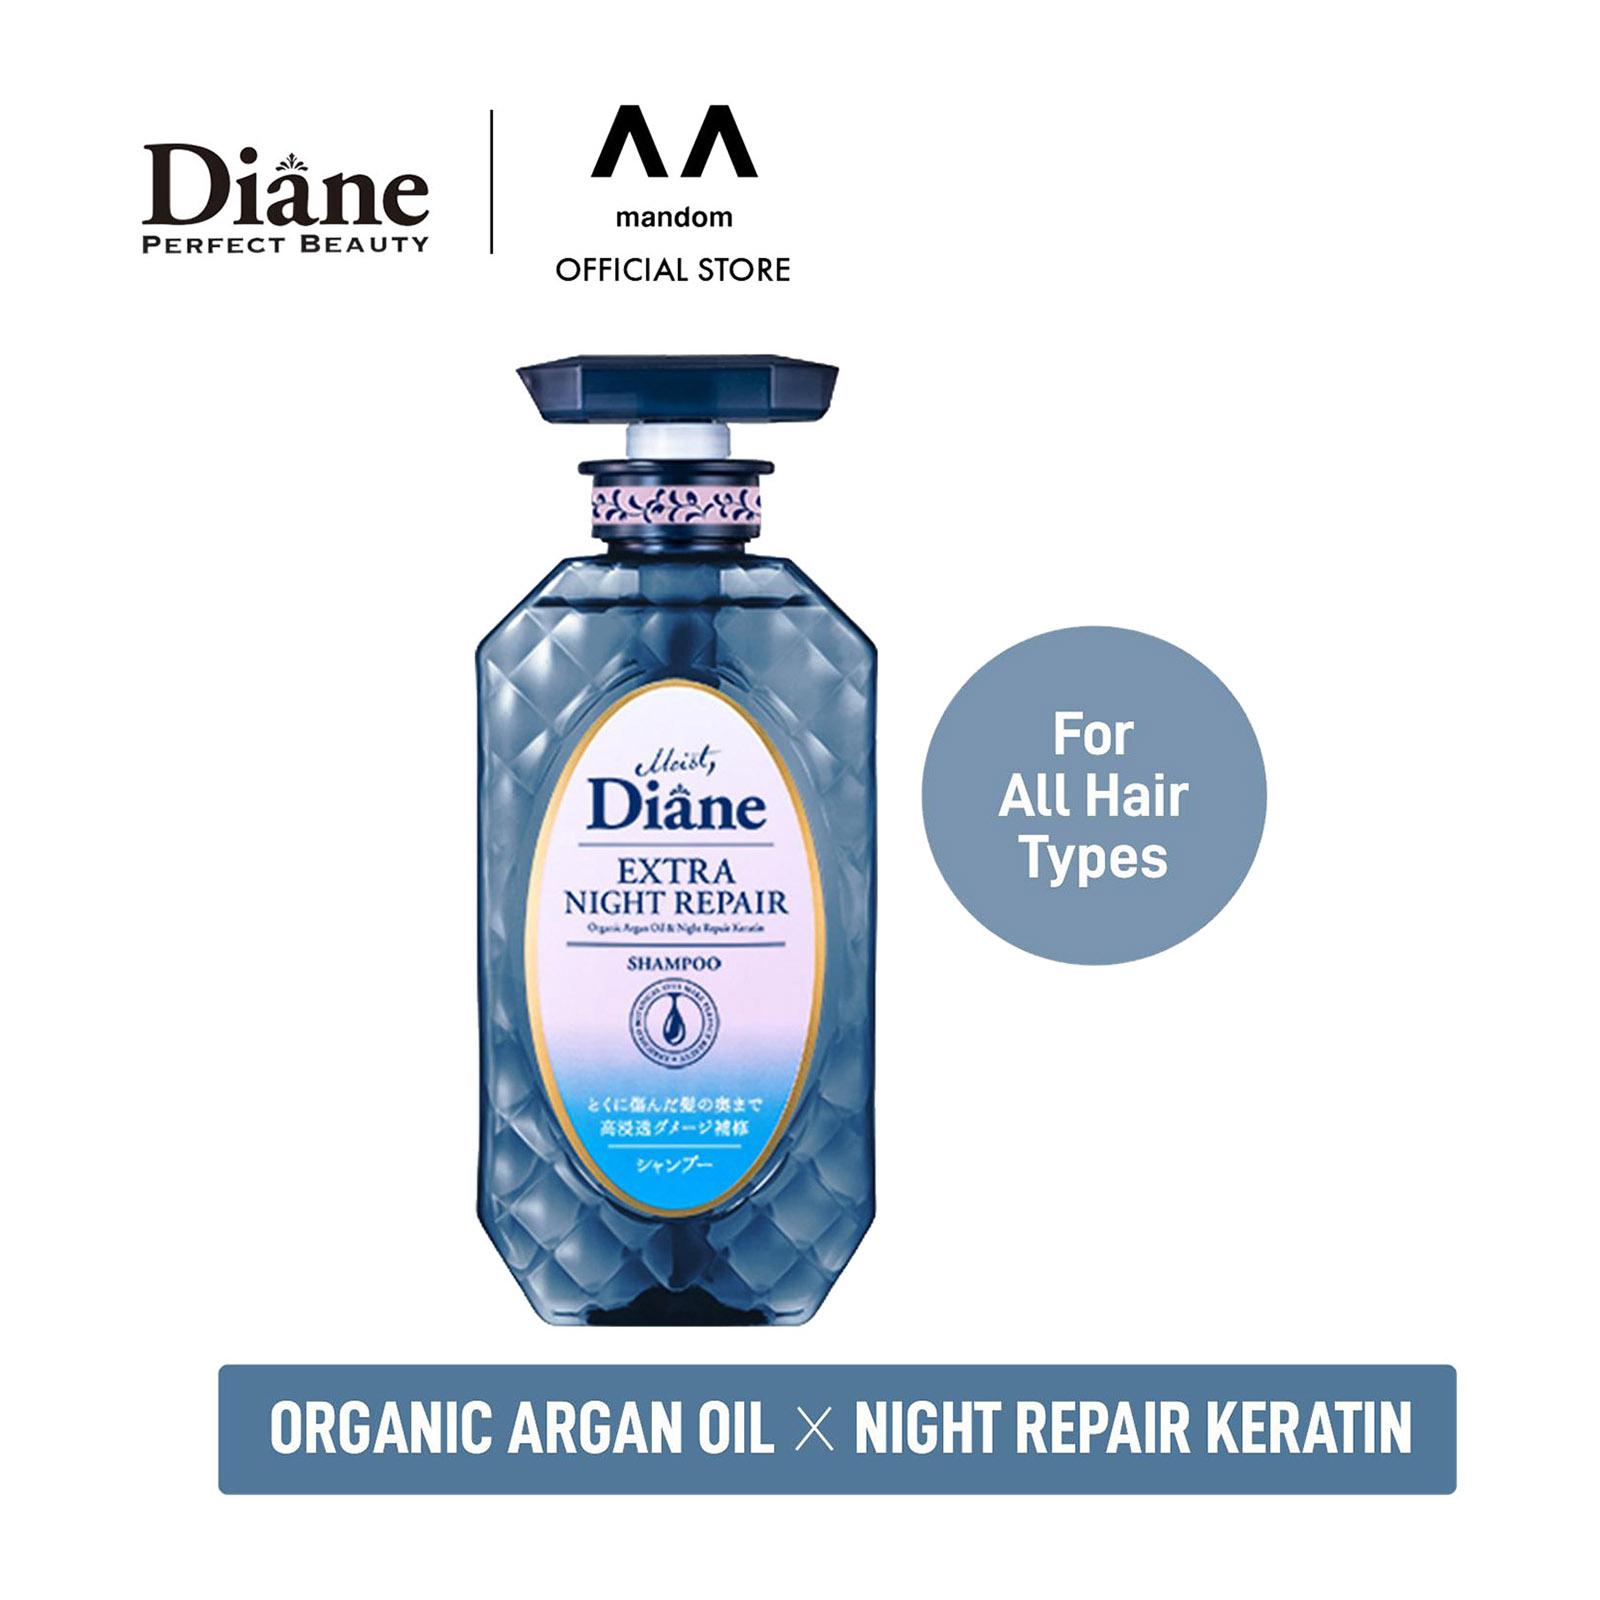 Moist Diane Perfect Beauty Extra Night Repair Shampoo | Lazada Singapore